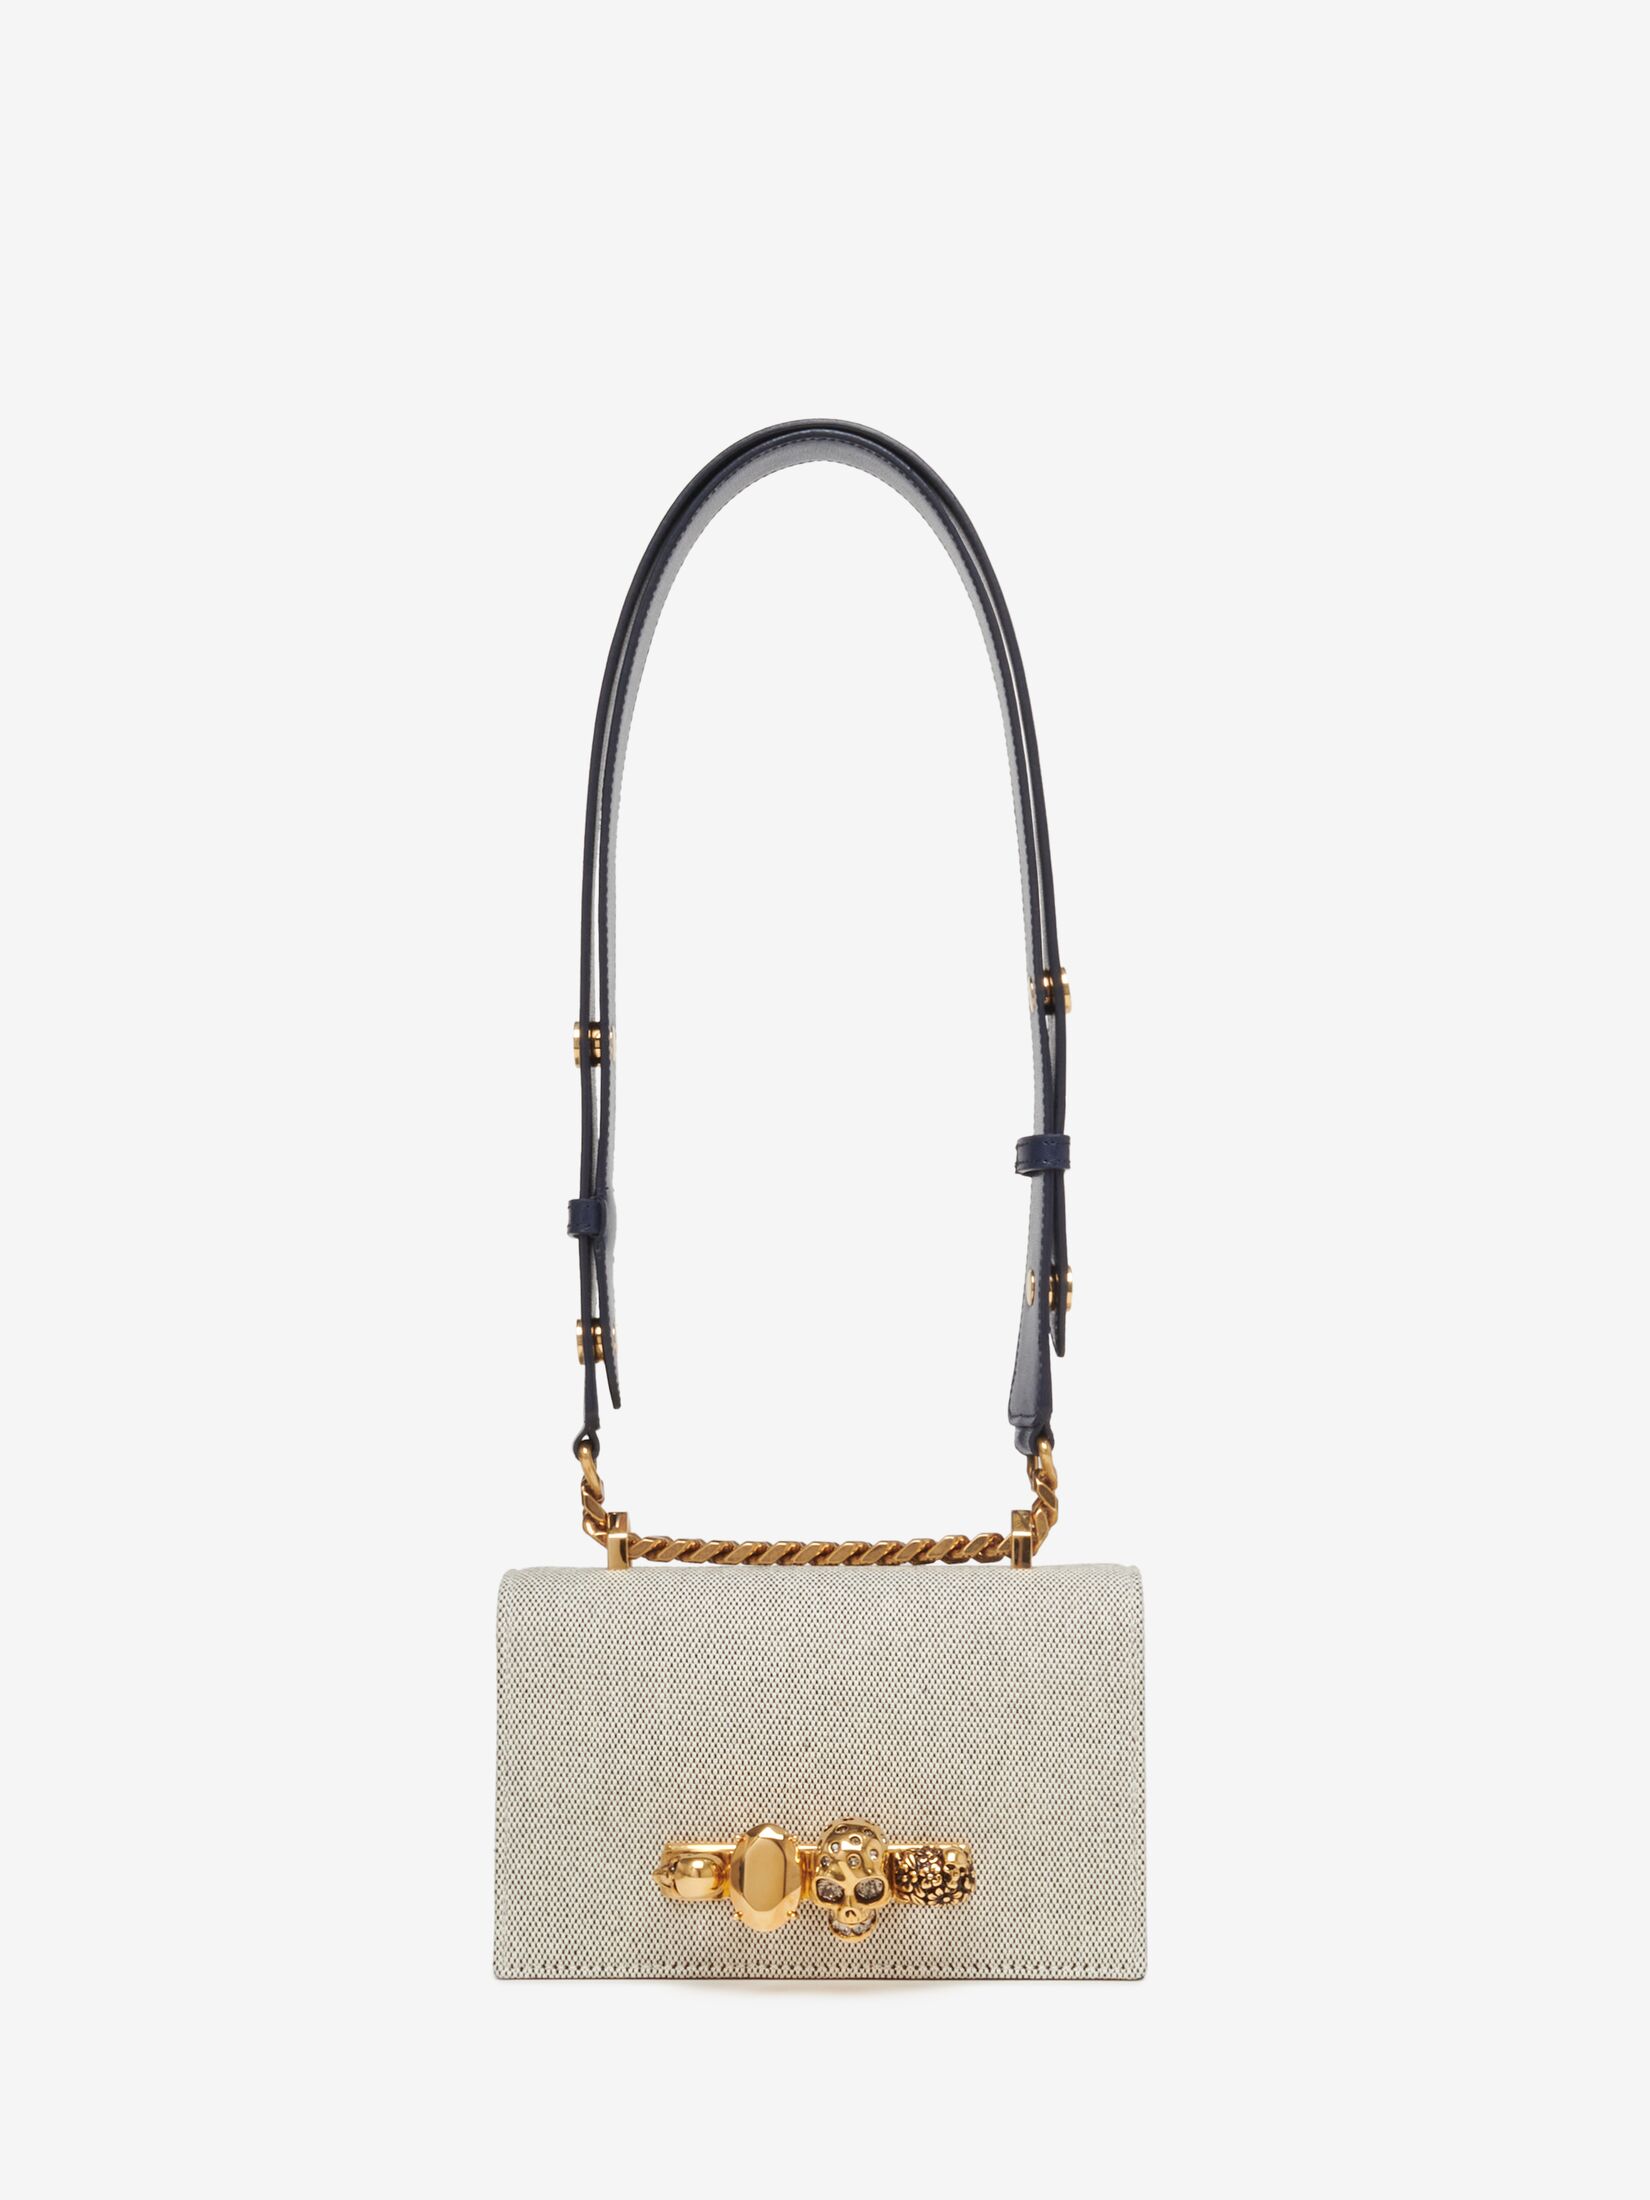 Designer Handbags | Luxury Handbags | Alexander McQueen US